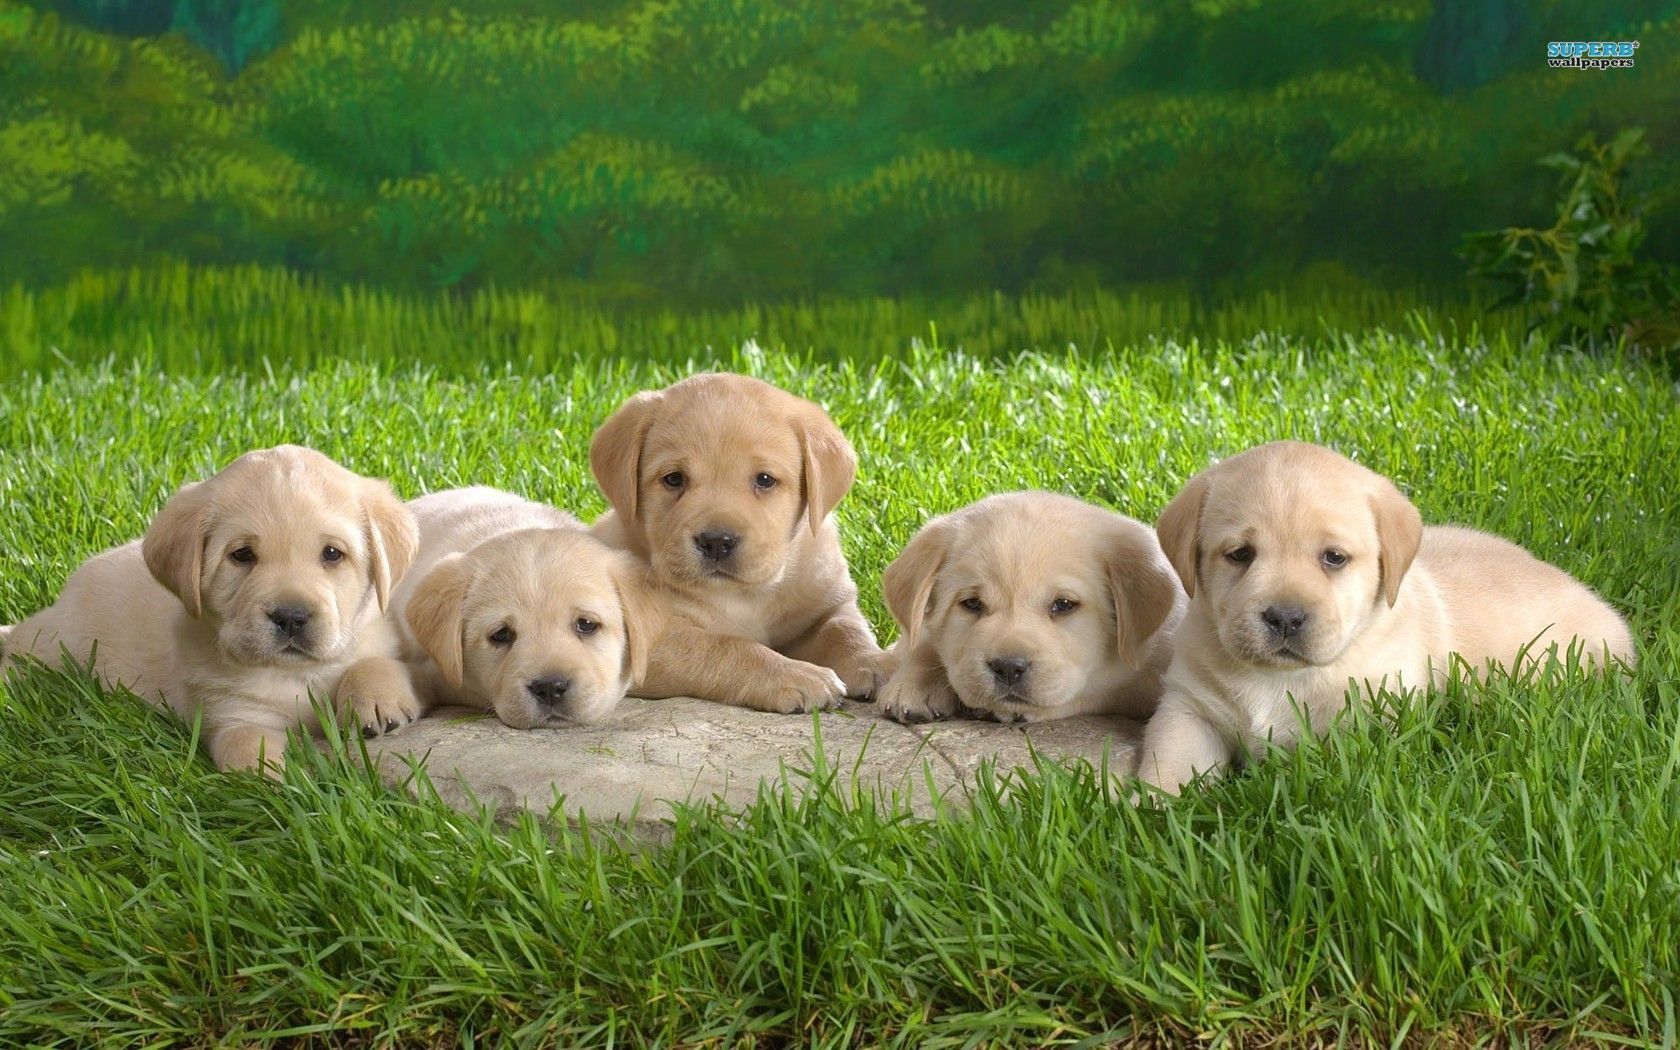 Labrador Puppies wallpaper - Animal wallpapers